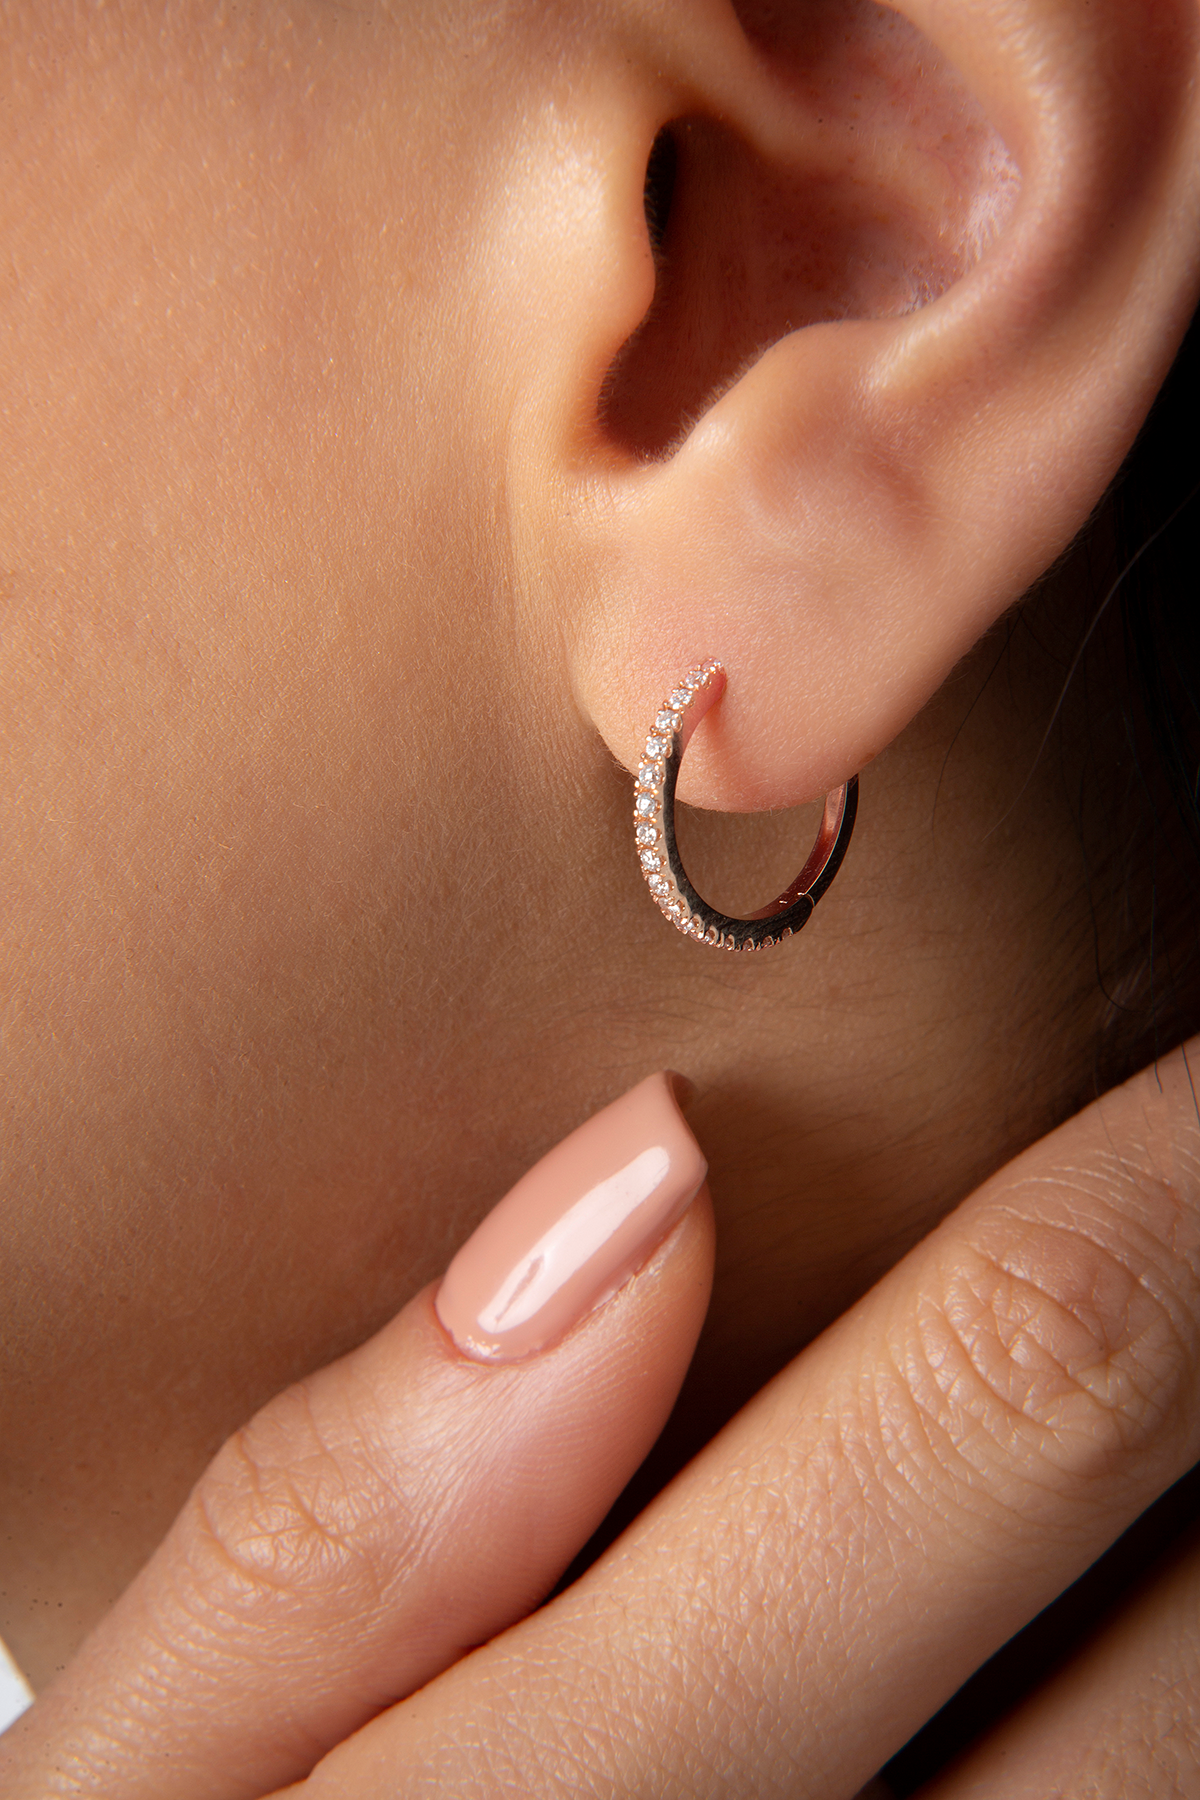 Mini Circular Earring in Rose Gold - Her Story Shop